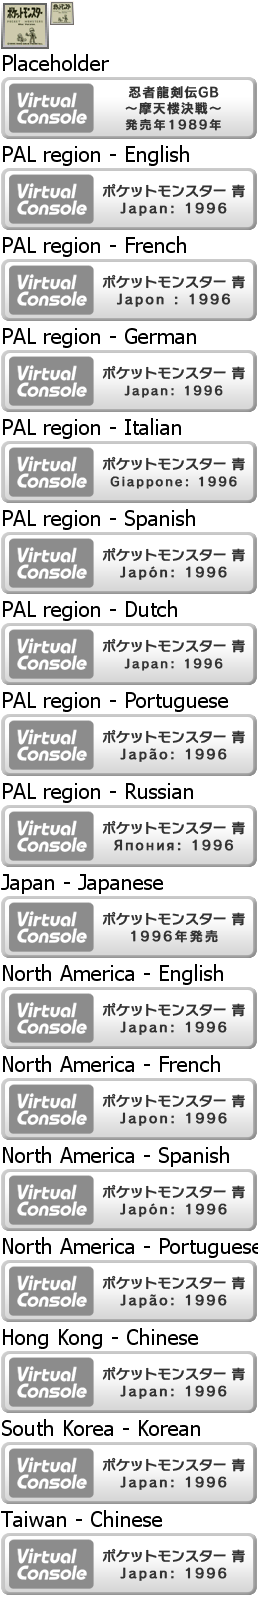 Virtual Console - Pocket Monsters Ao